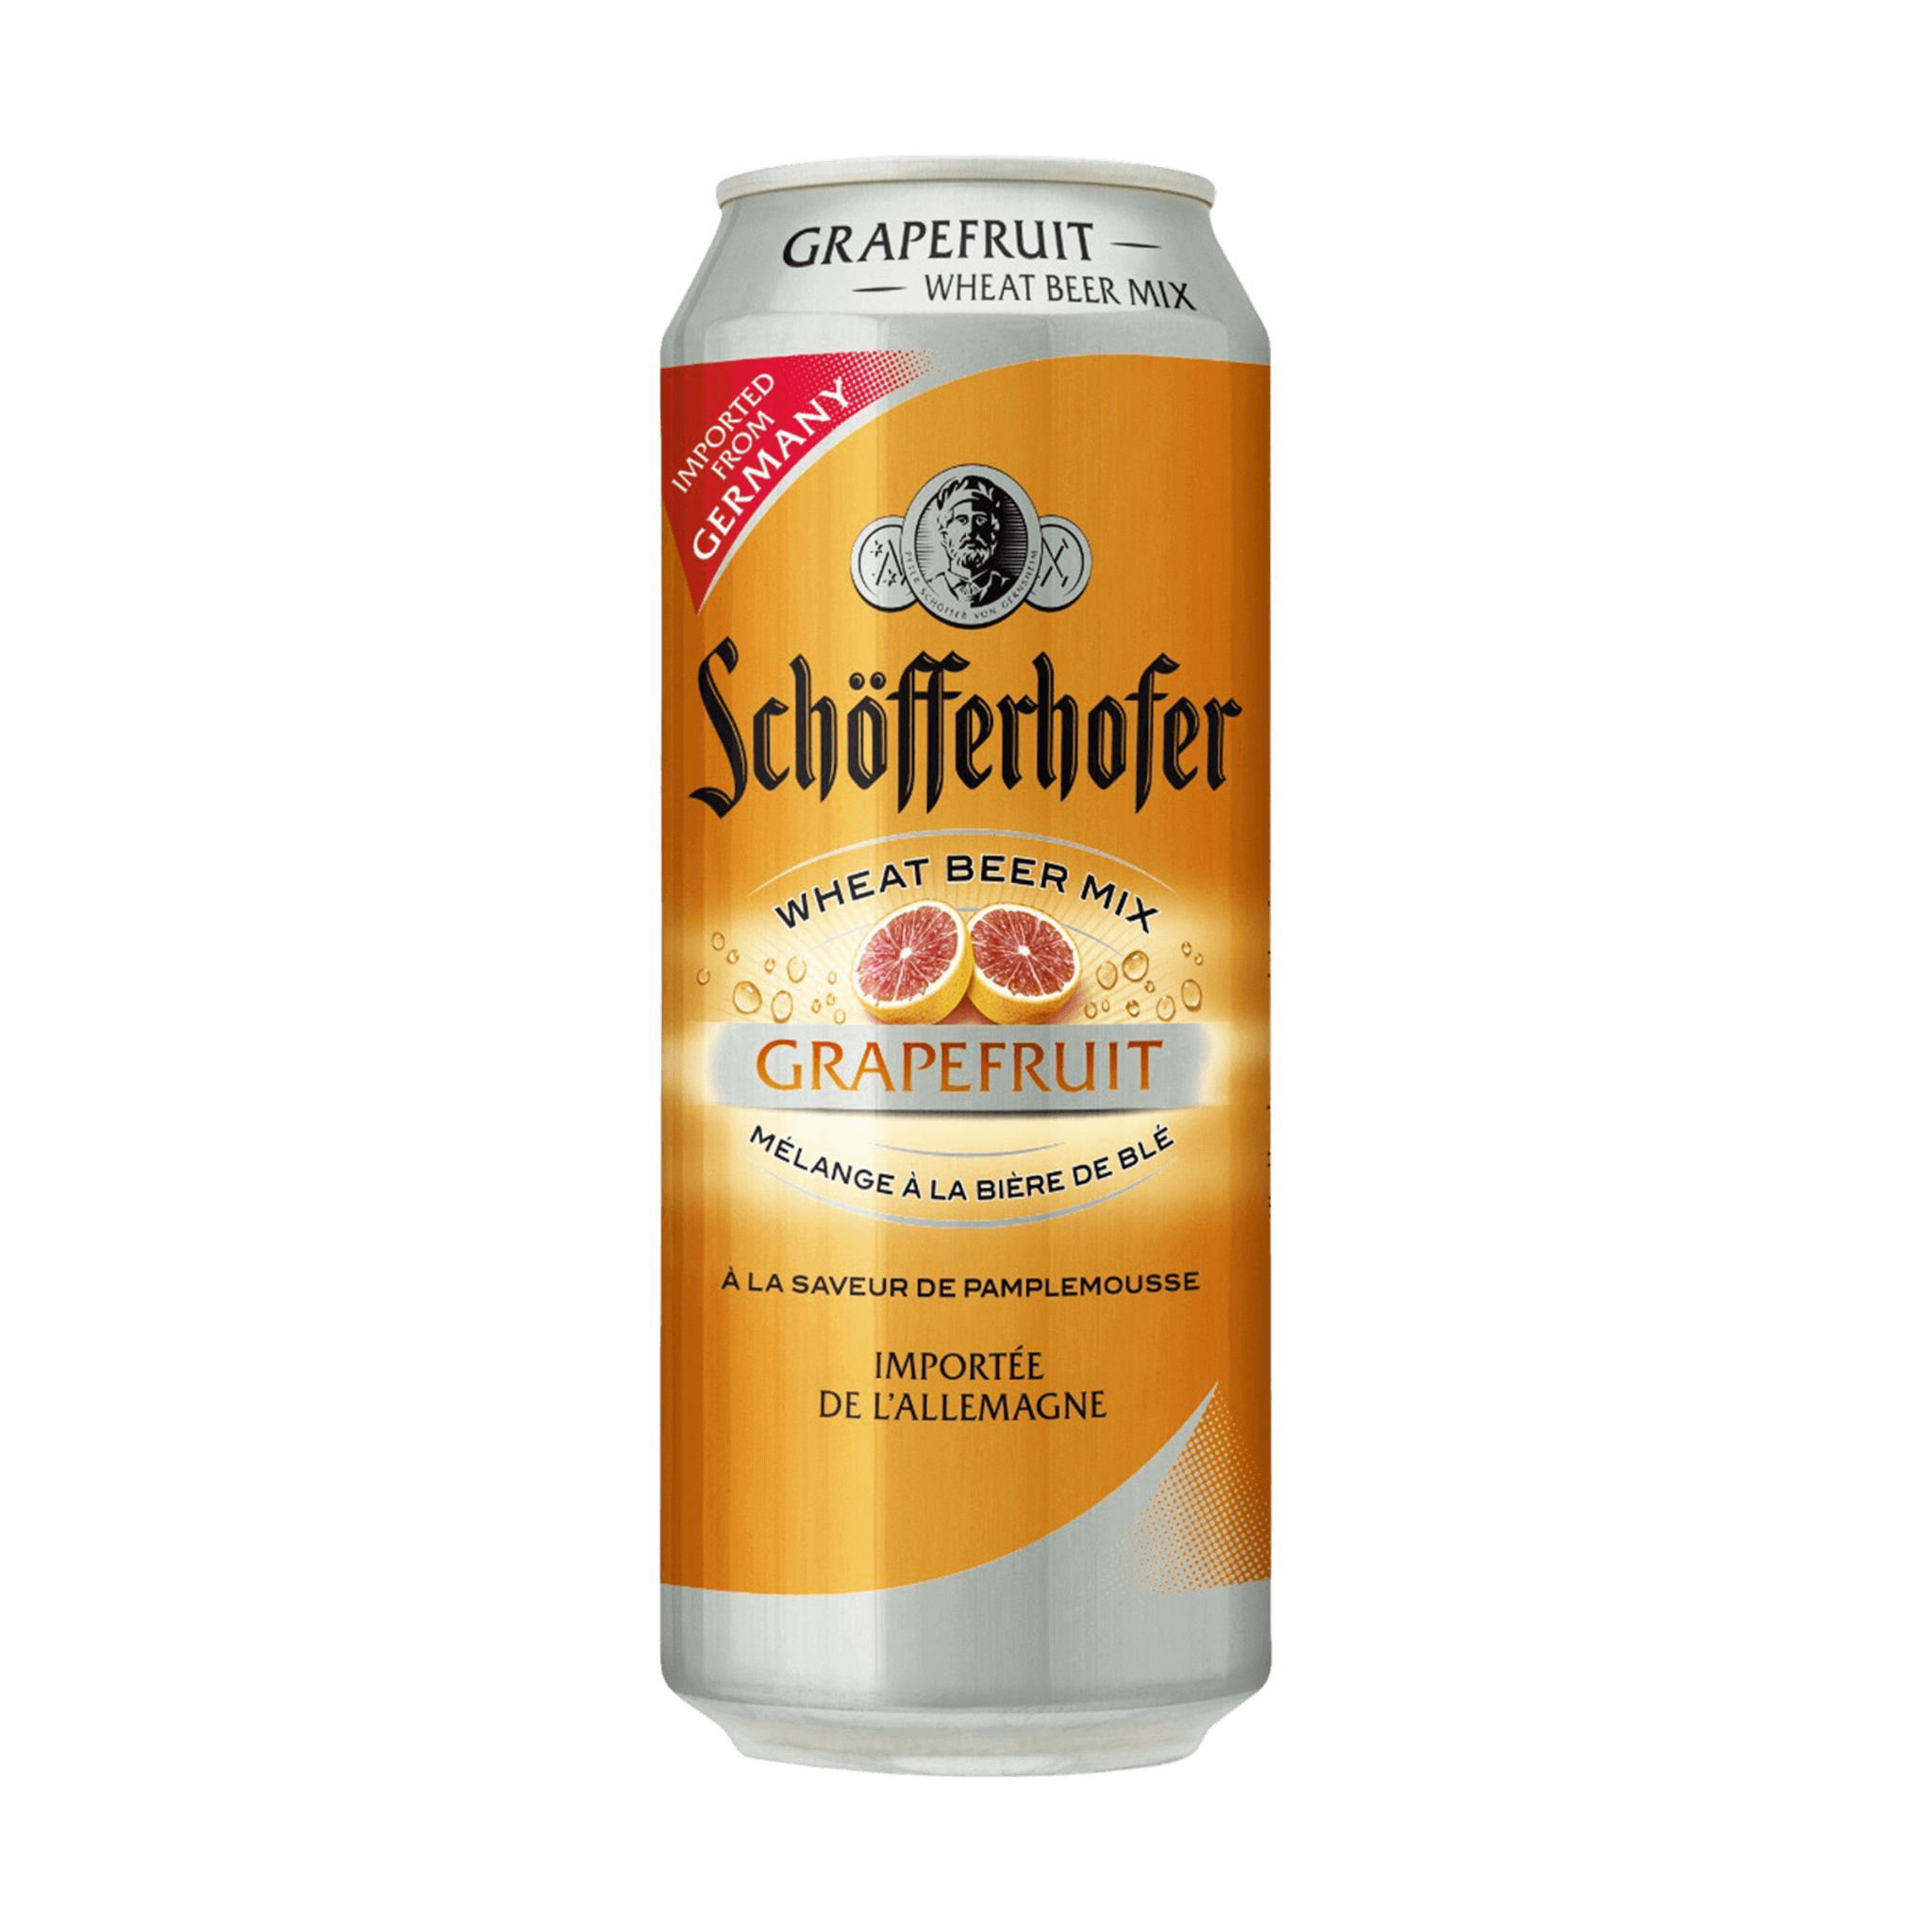 Schöfferhofer Grapefruit Flavored Beer 500ml Can at ₱159.00